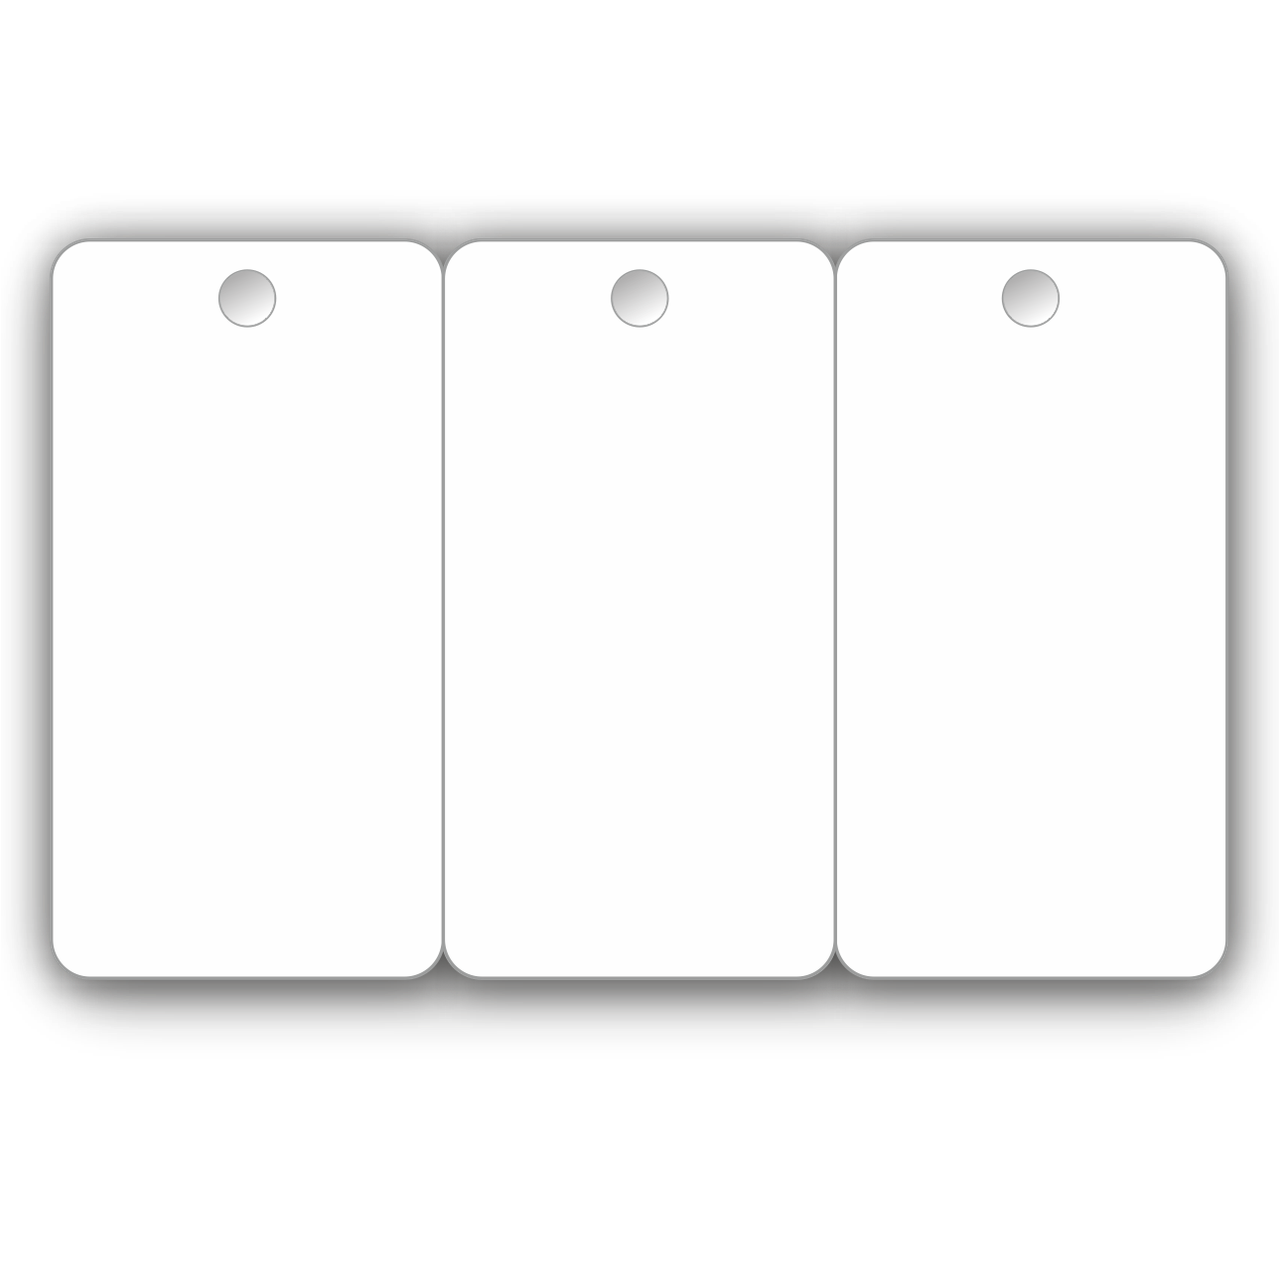 Заготовка 3-TAG карт без печати